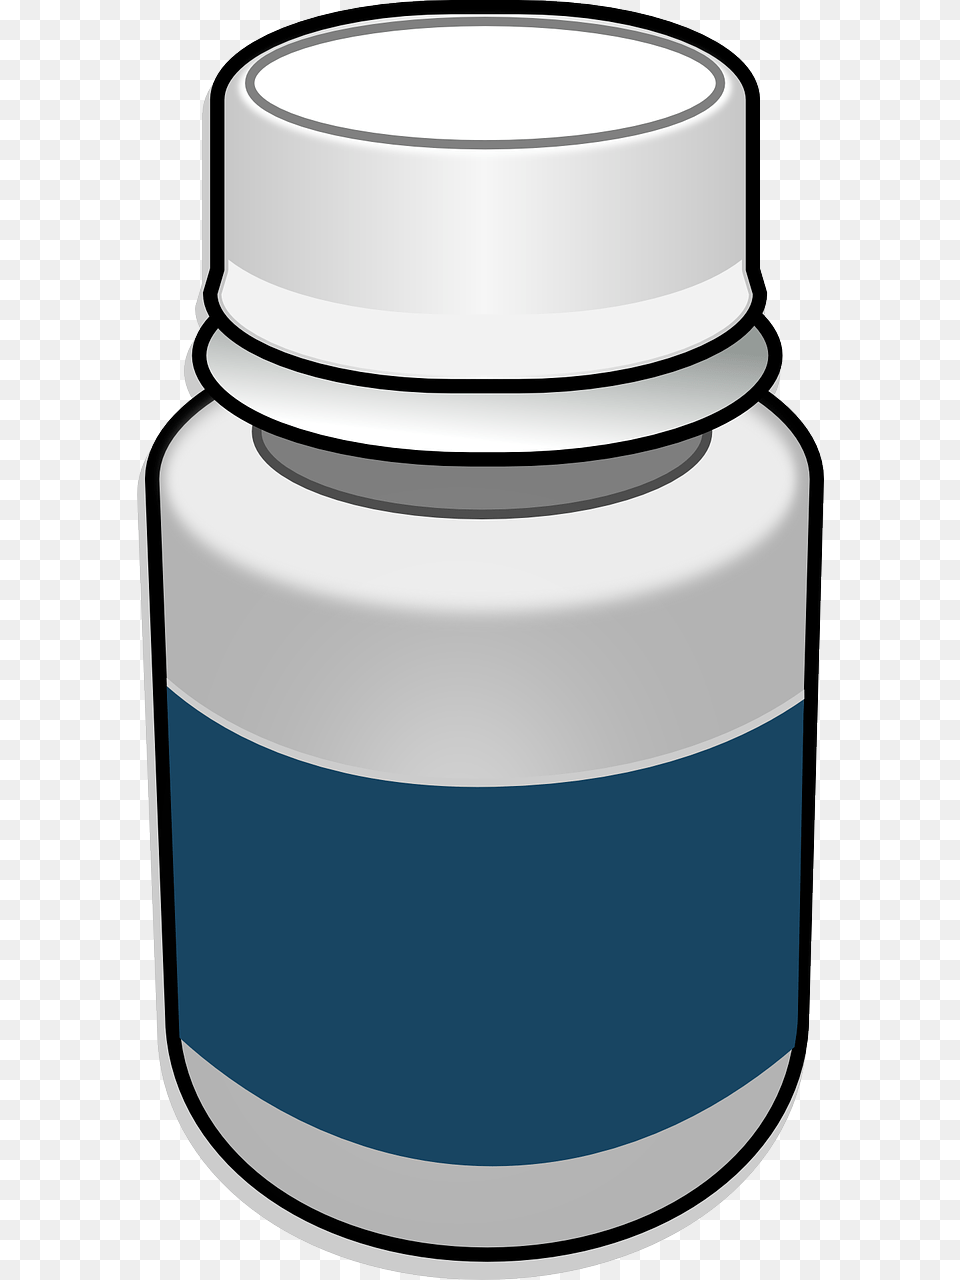 Printable Clipart And Coloring Pages Transparent Background Medicine Bottle Clipart, Jar, Ink Bottle Png Image